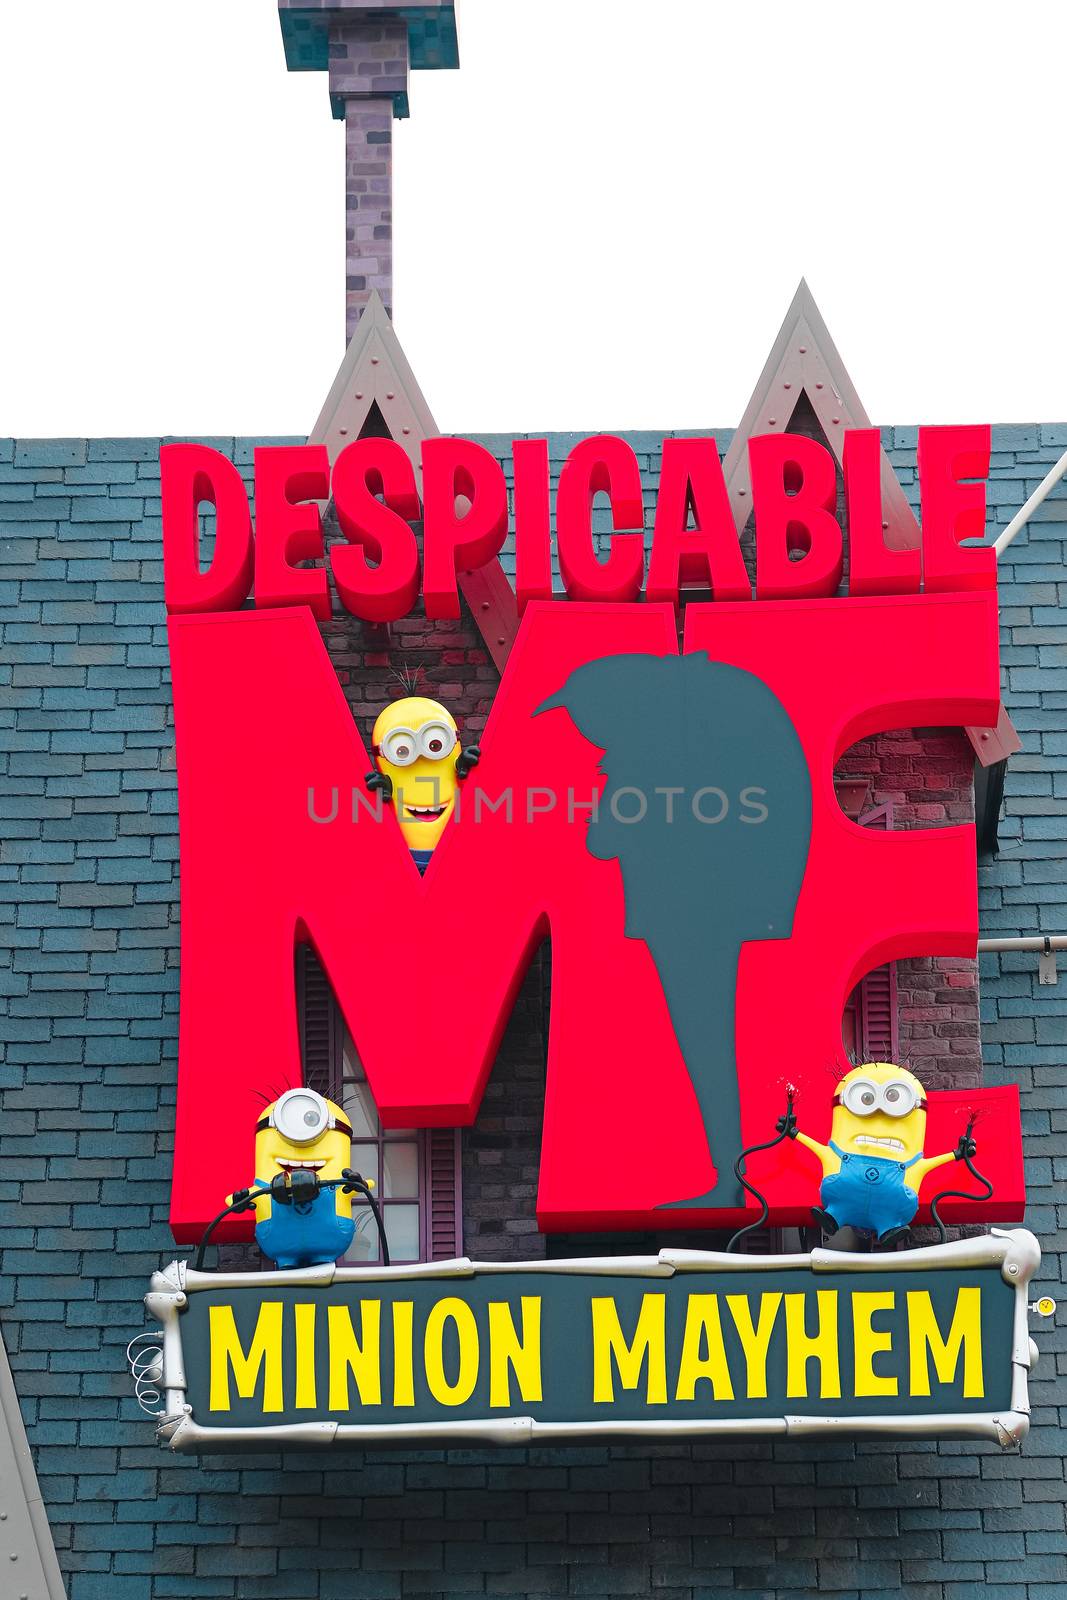 Entrance Sign of Despicable Me Minion Mayhem. Universal Studios JAPAN by USA-TARO